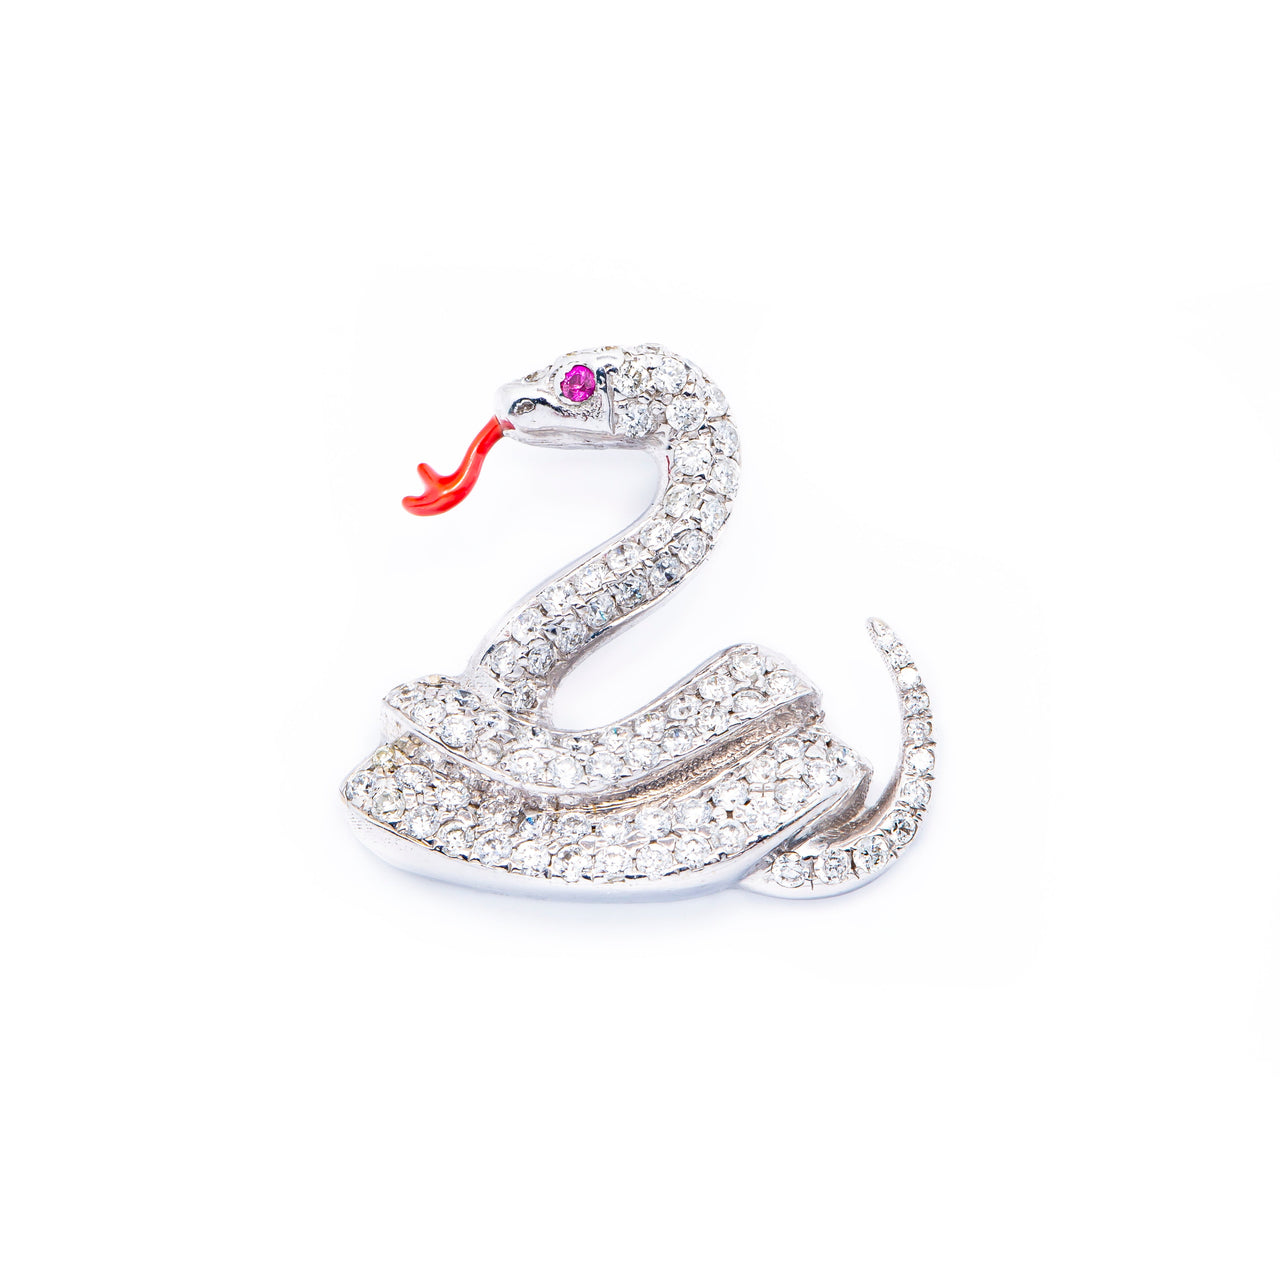 White 14k diamond snake pendant 1.35ctw